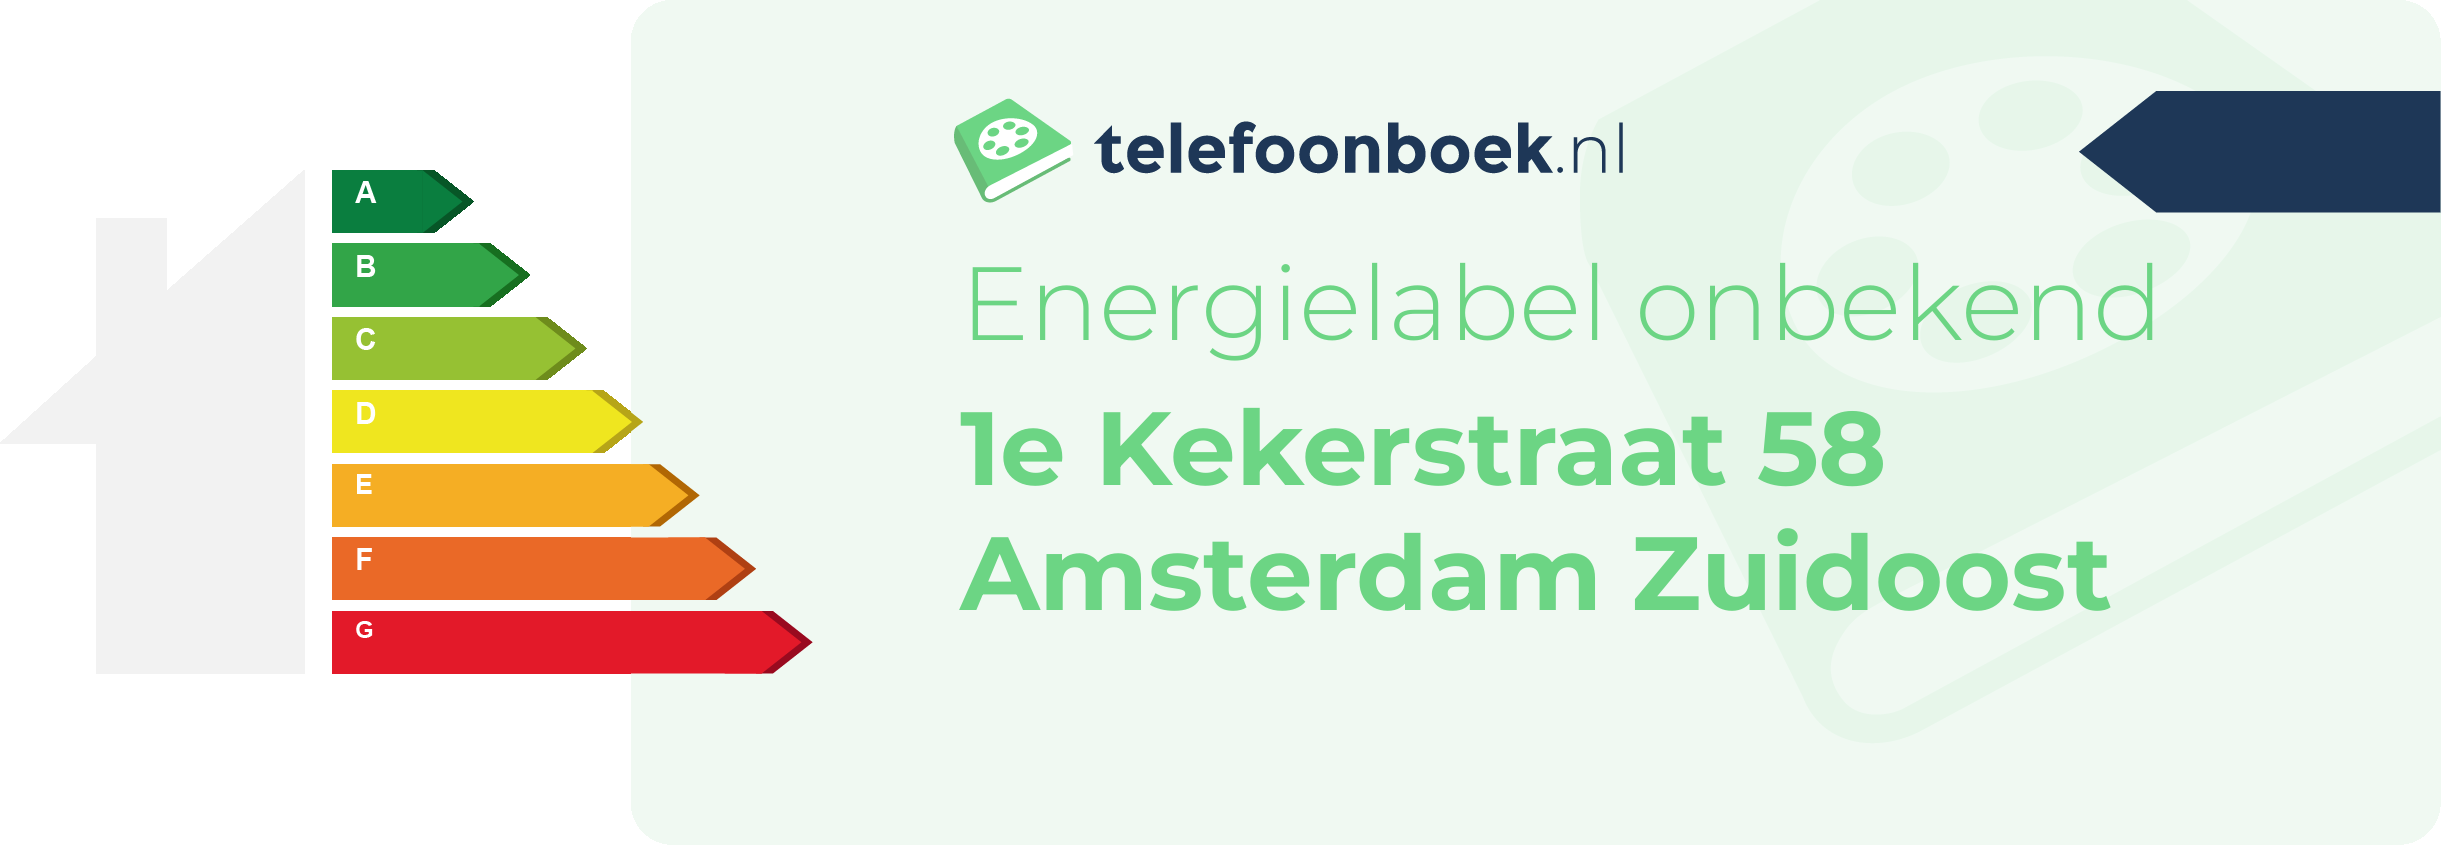 Energielabel 1e Kekerstraat 58 Amsterdam Zuidoost